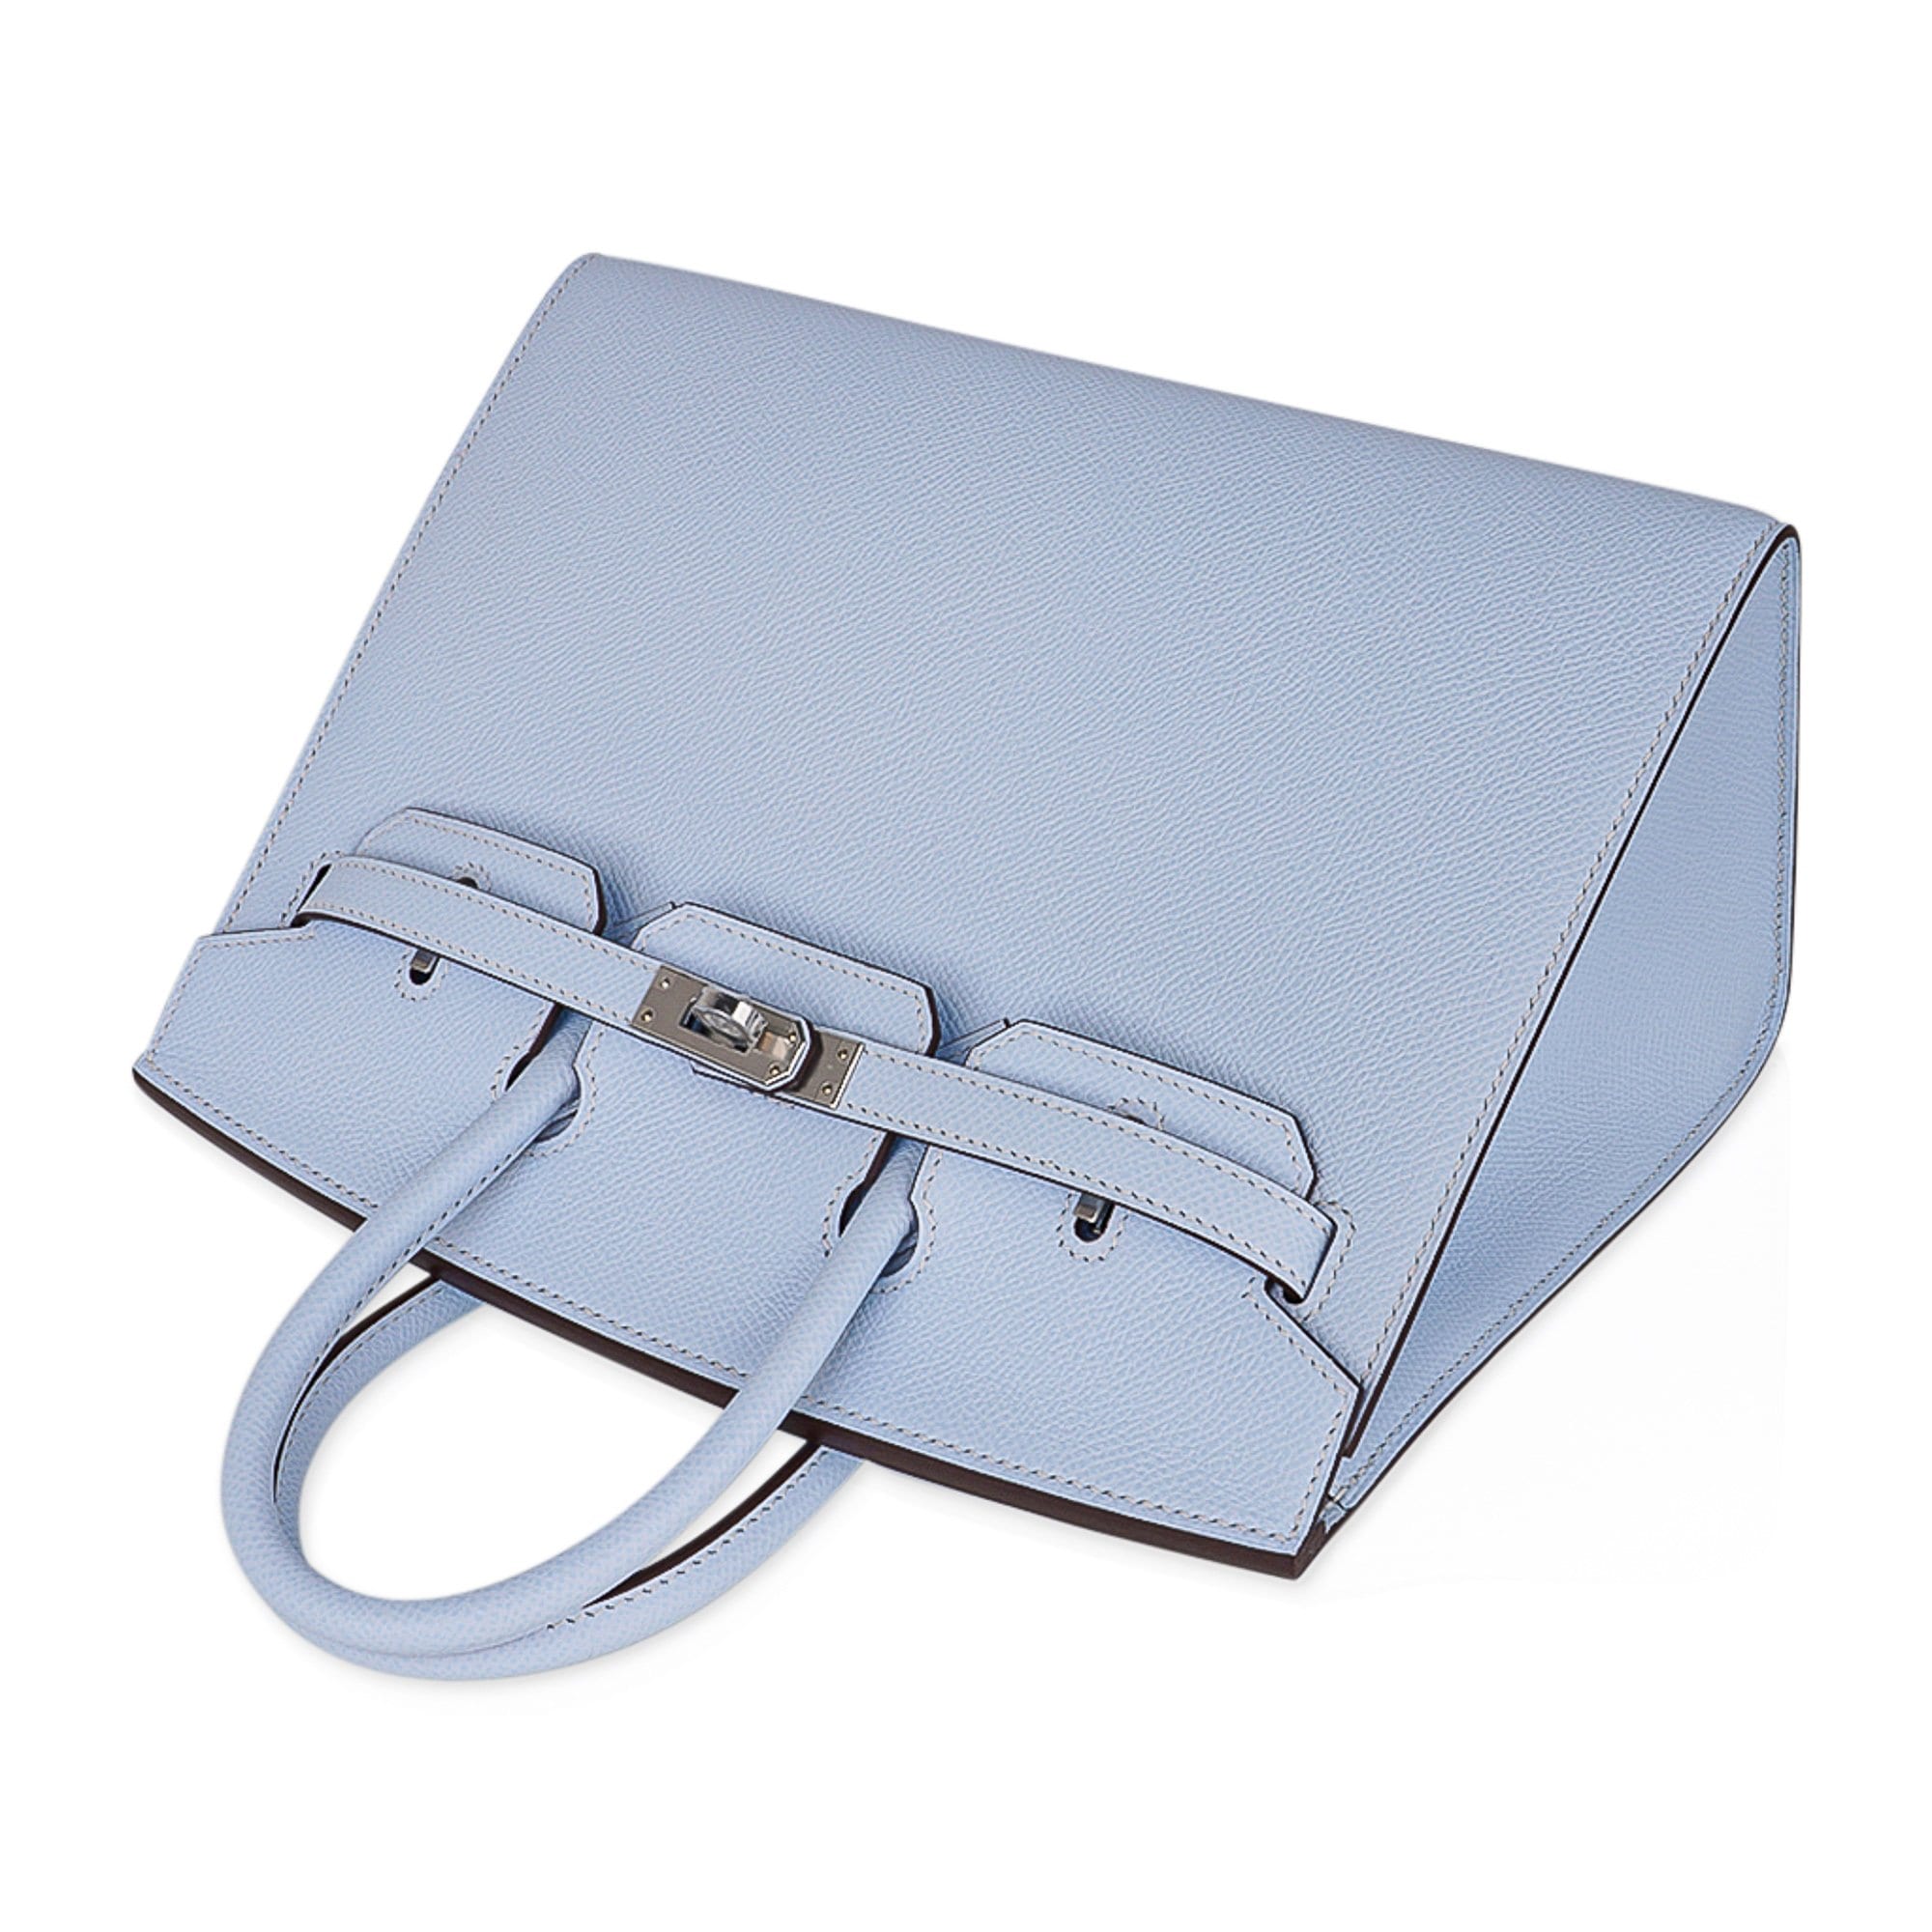 Hermes Birkin 25: Blue Leather Handbag